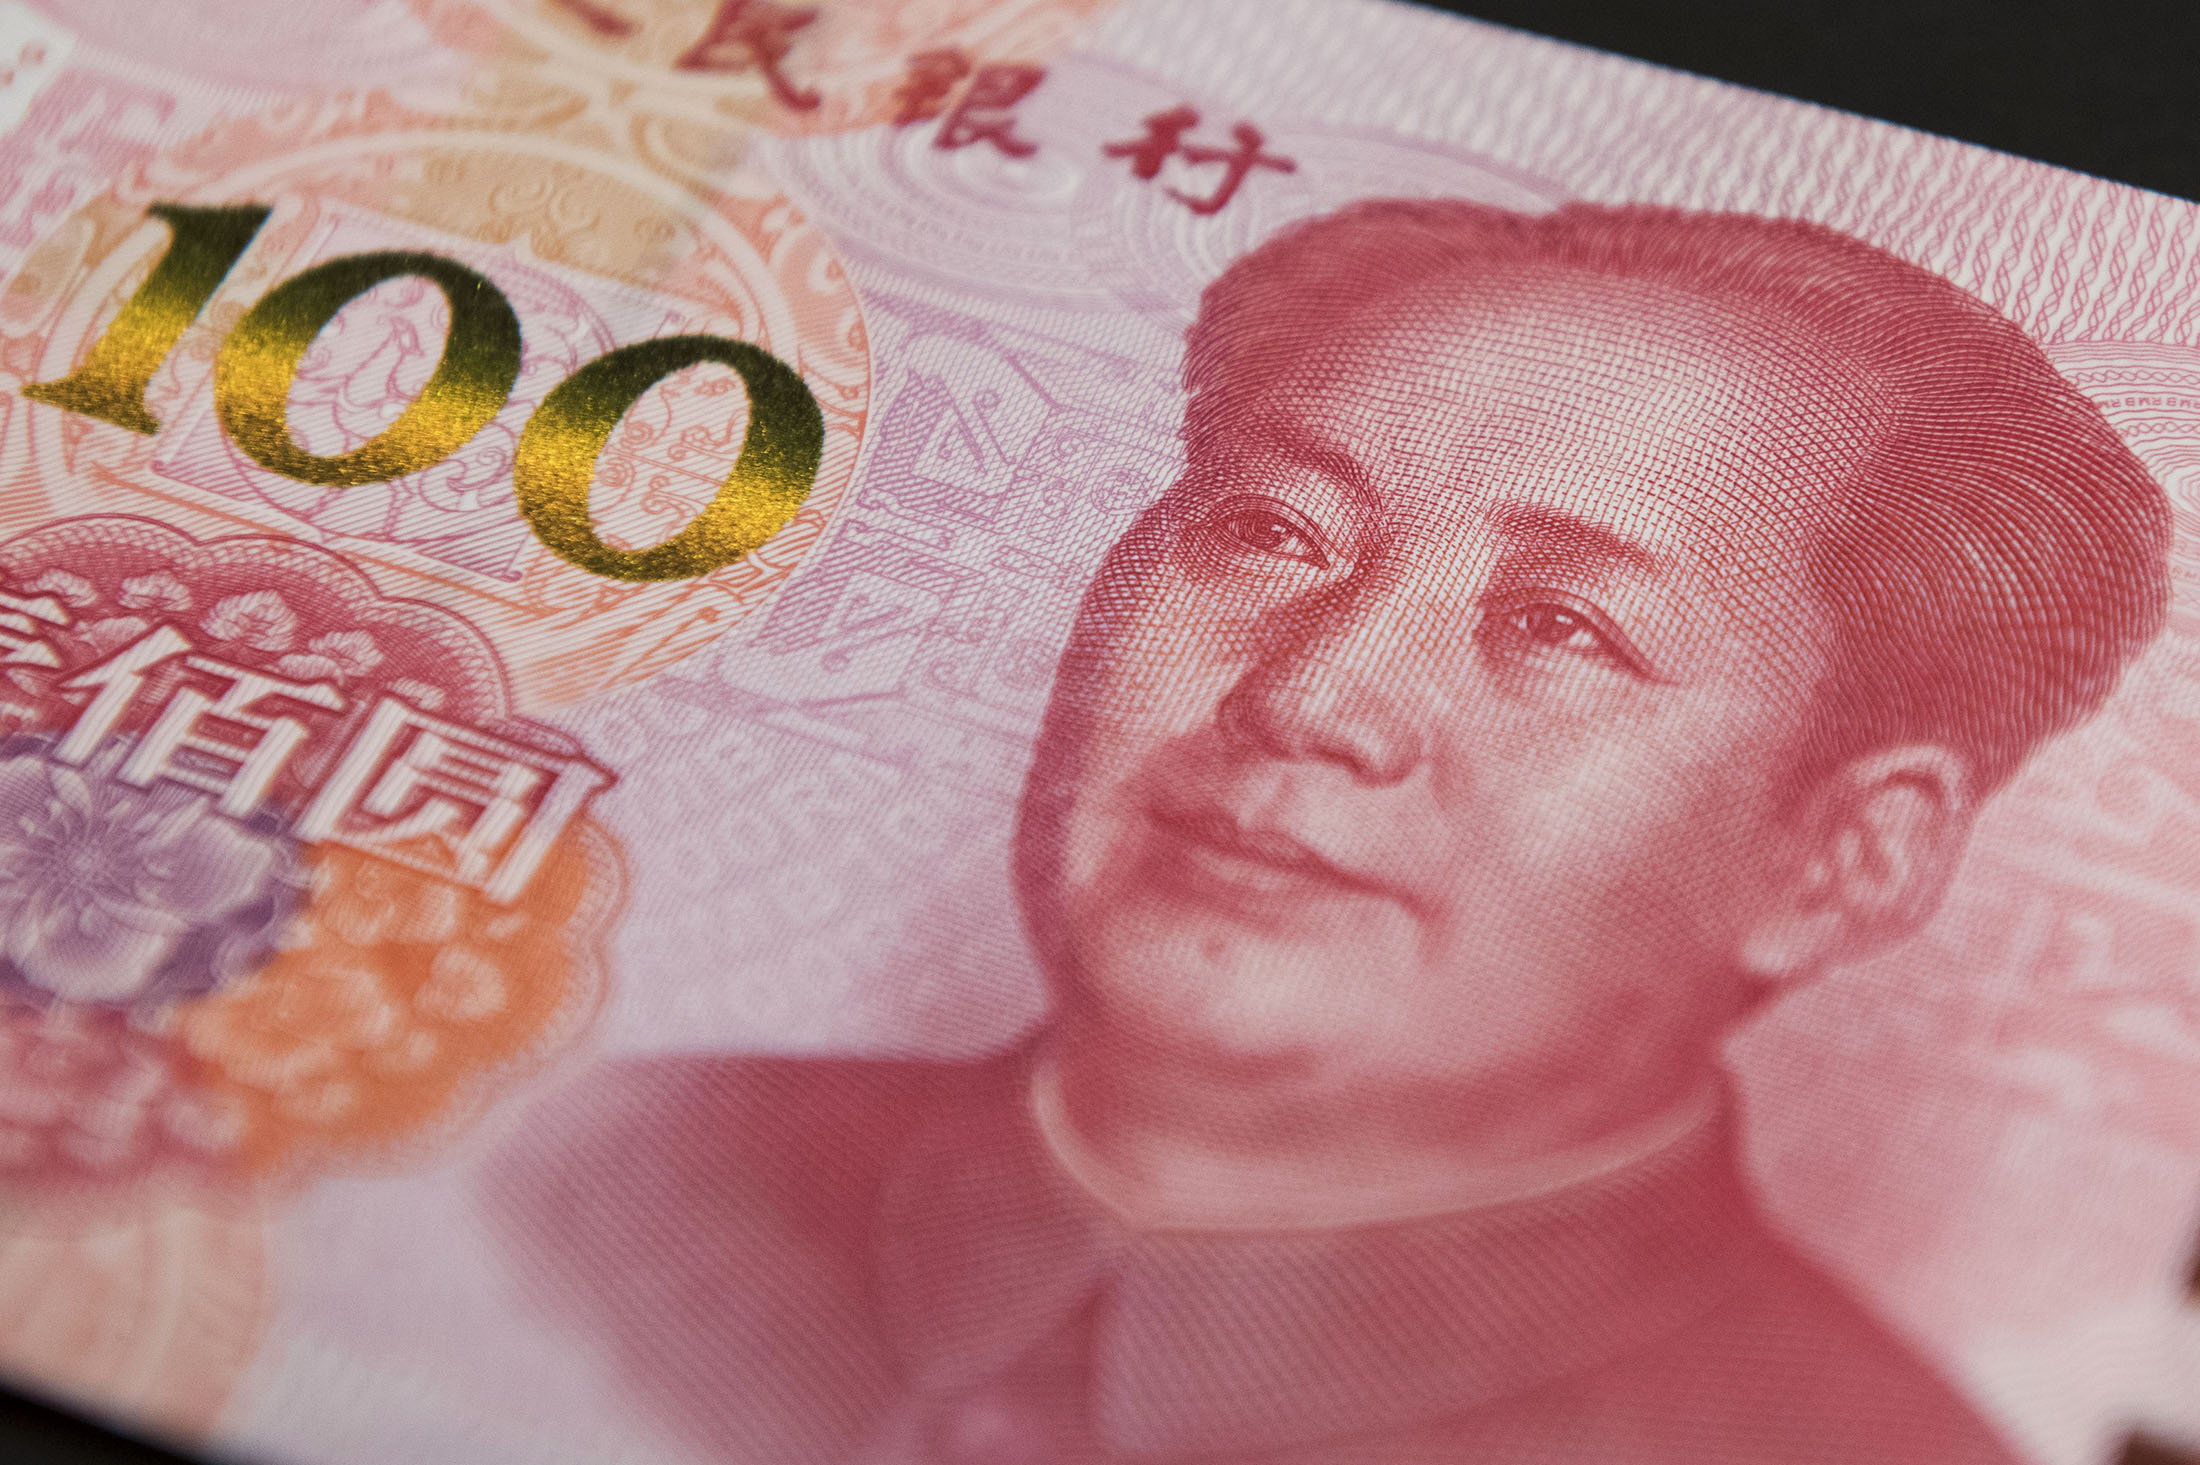 Июань. Китай юань. Валюта Китая юань. Юань купюры. Мао китайская валюта.